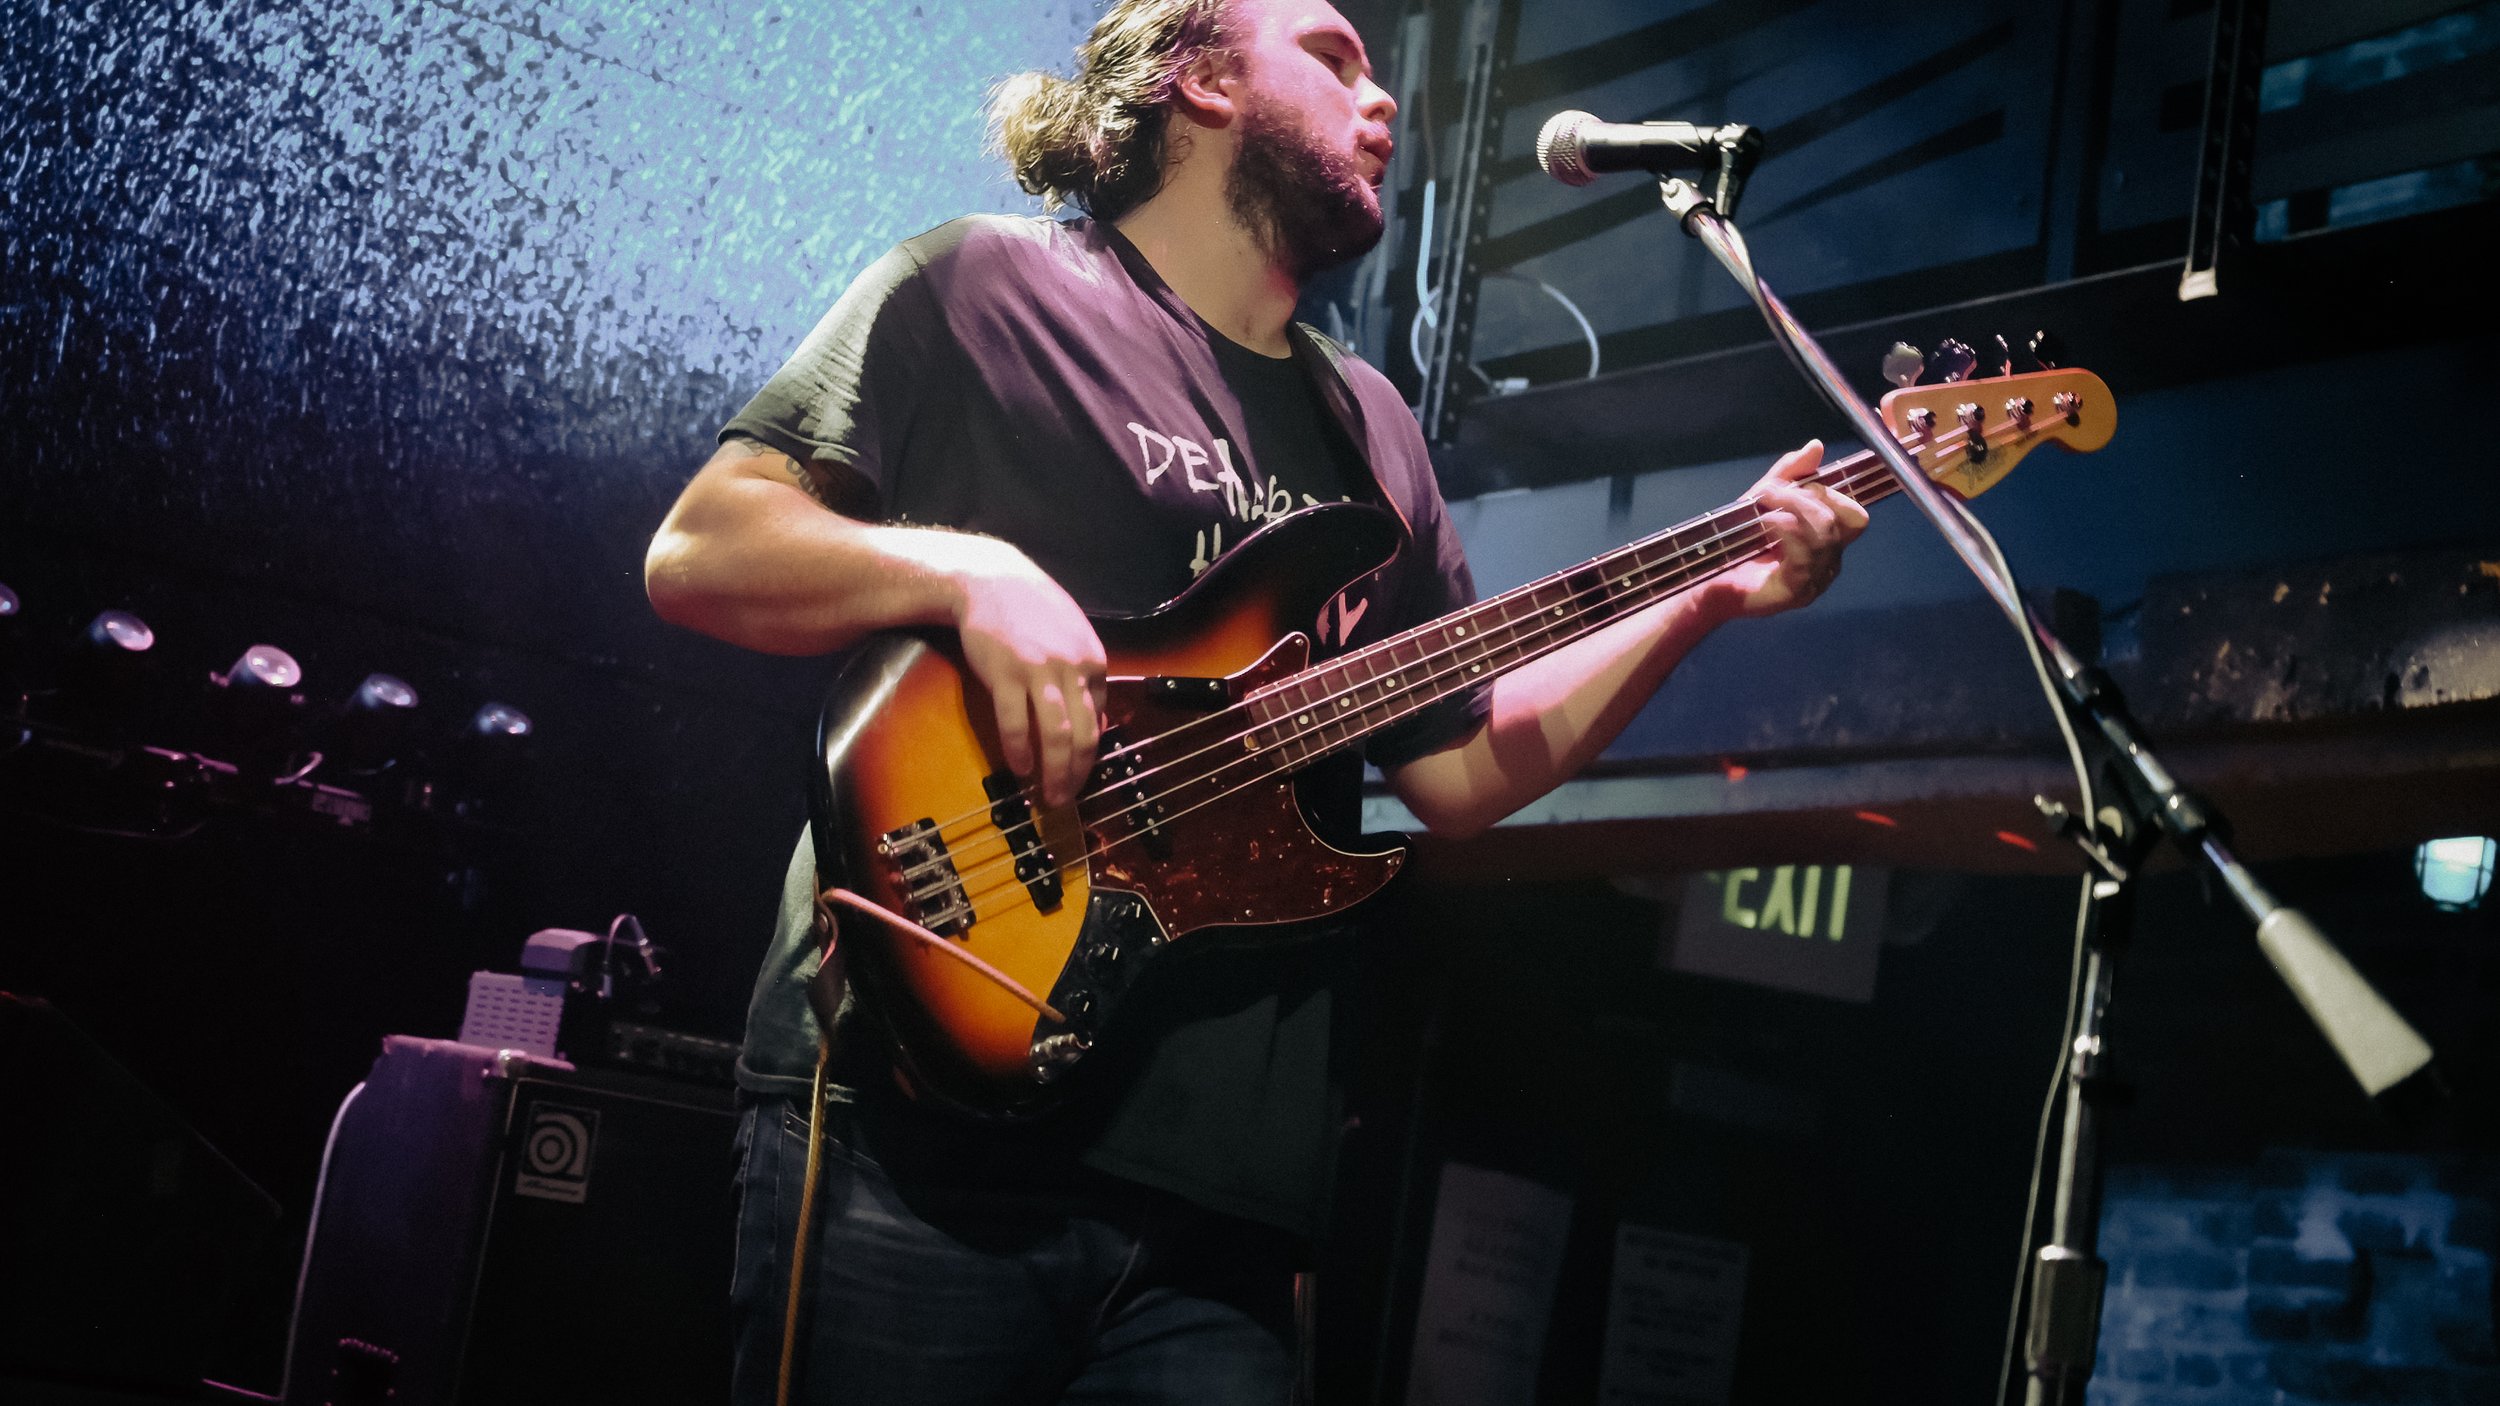 Kyle with Borrowed Bass at The 8x10 11.10.2021-3.jpg